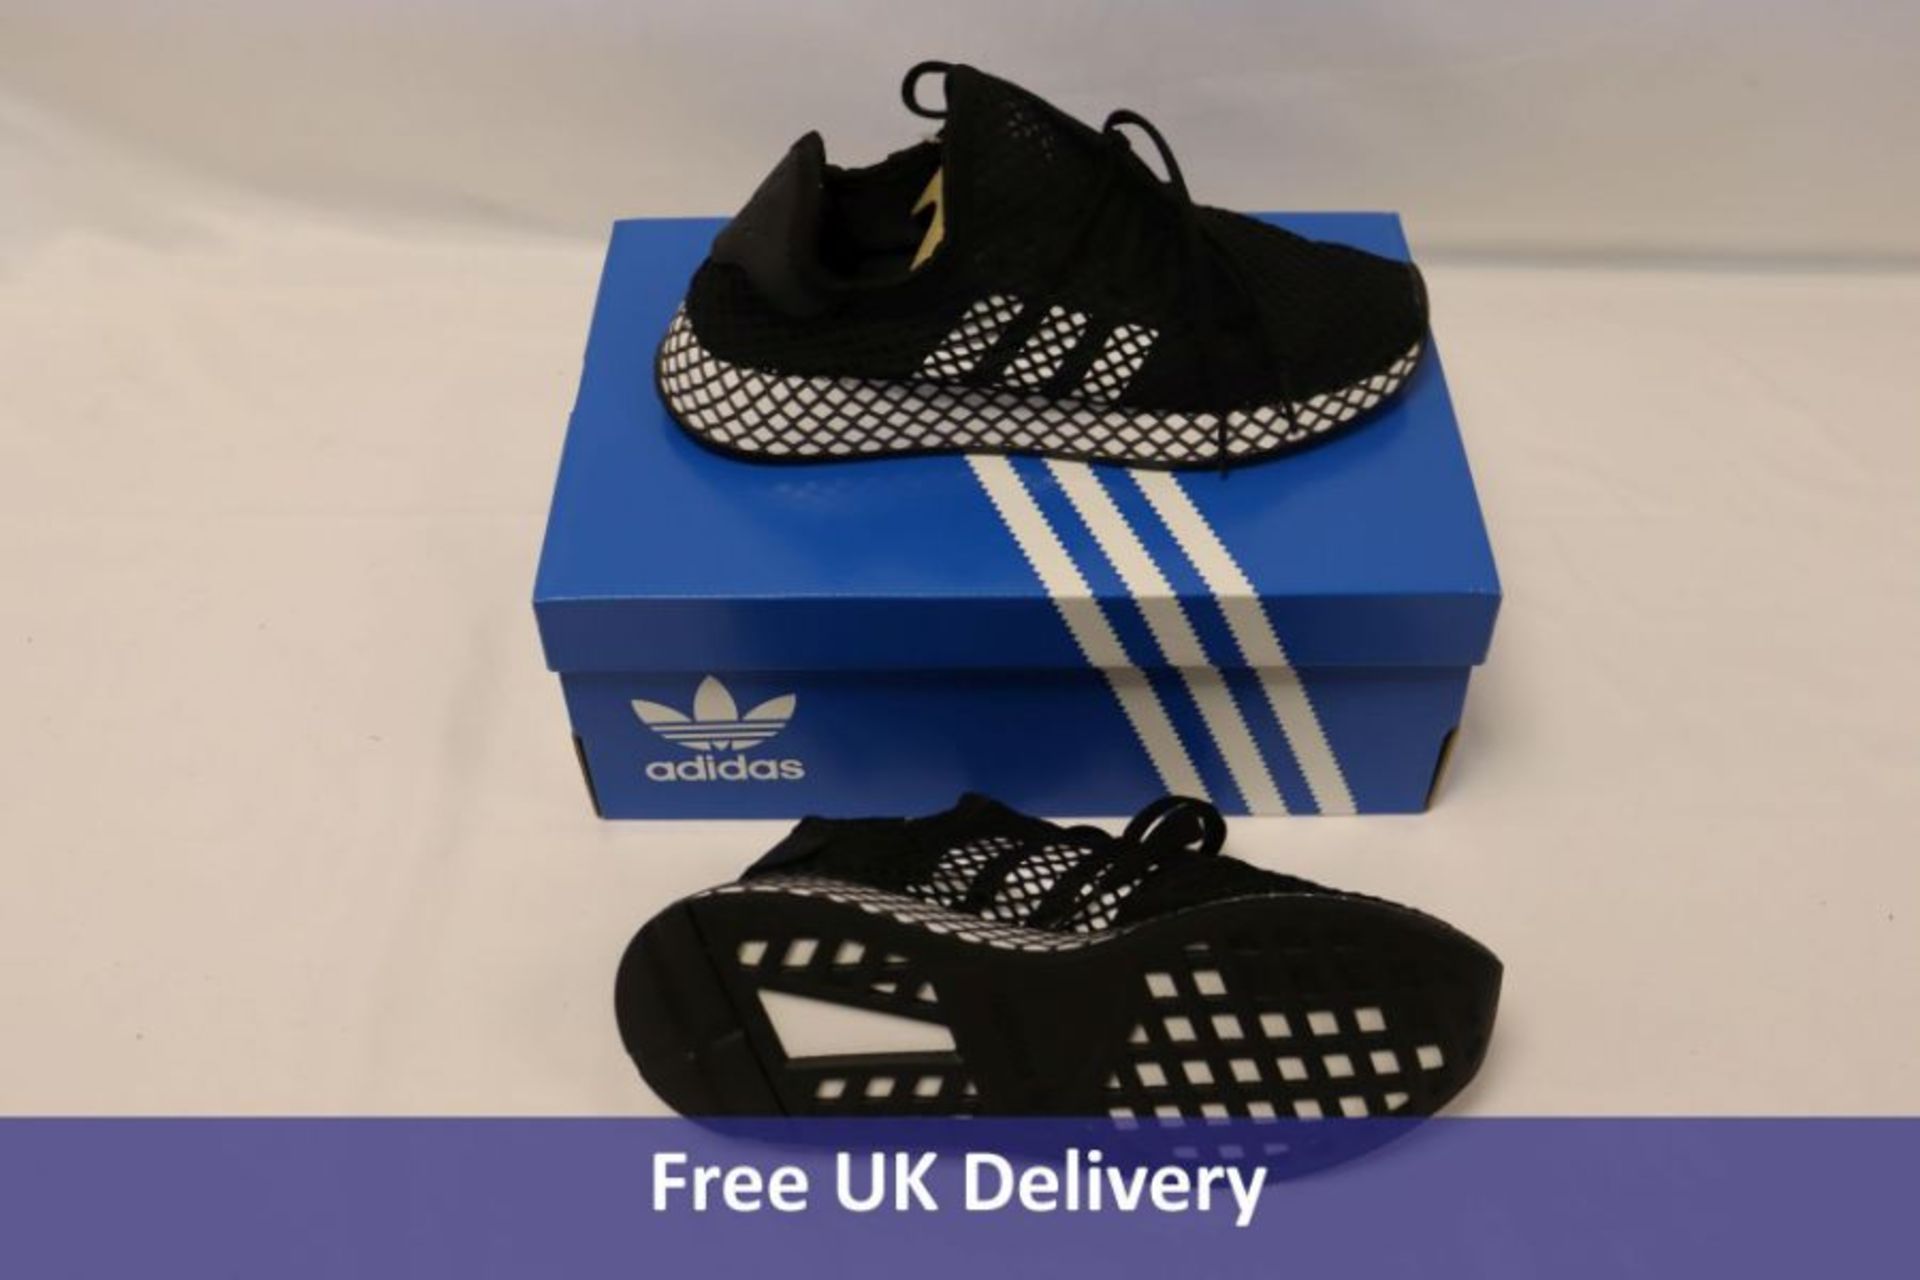 Adidas Deerupt Runner J, Black/White, UK 5.5